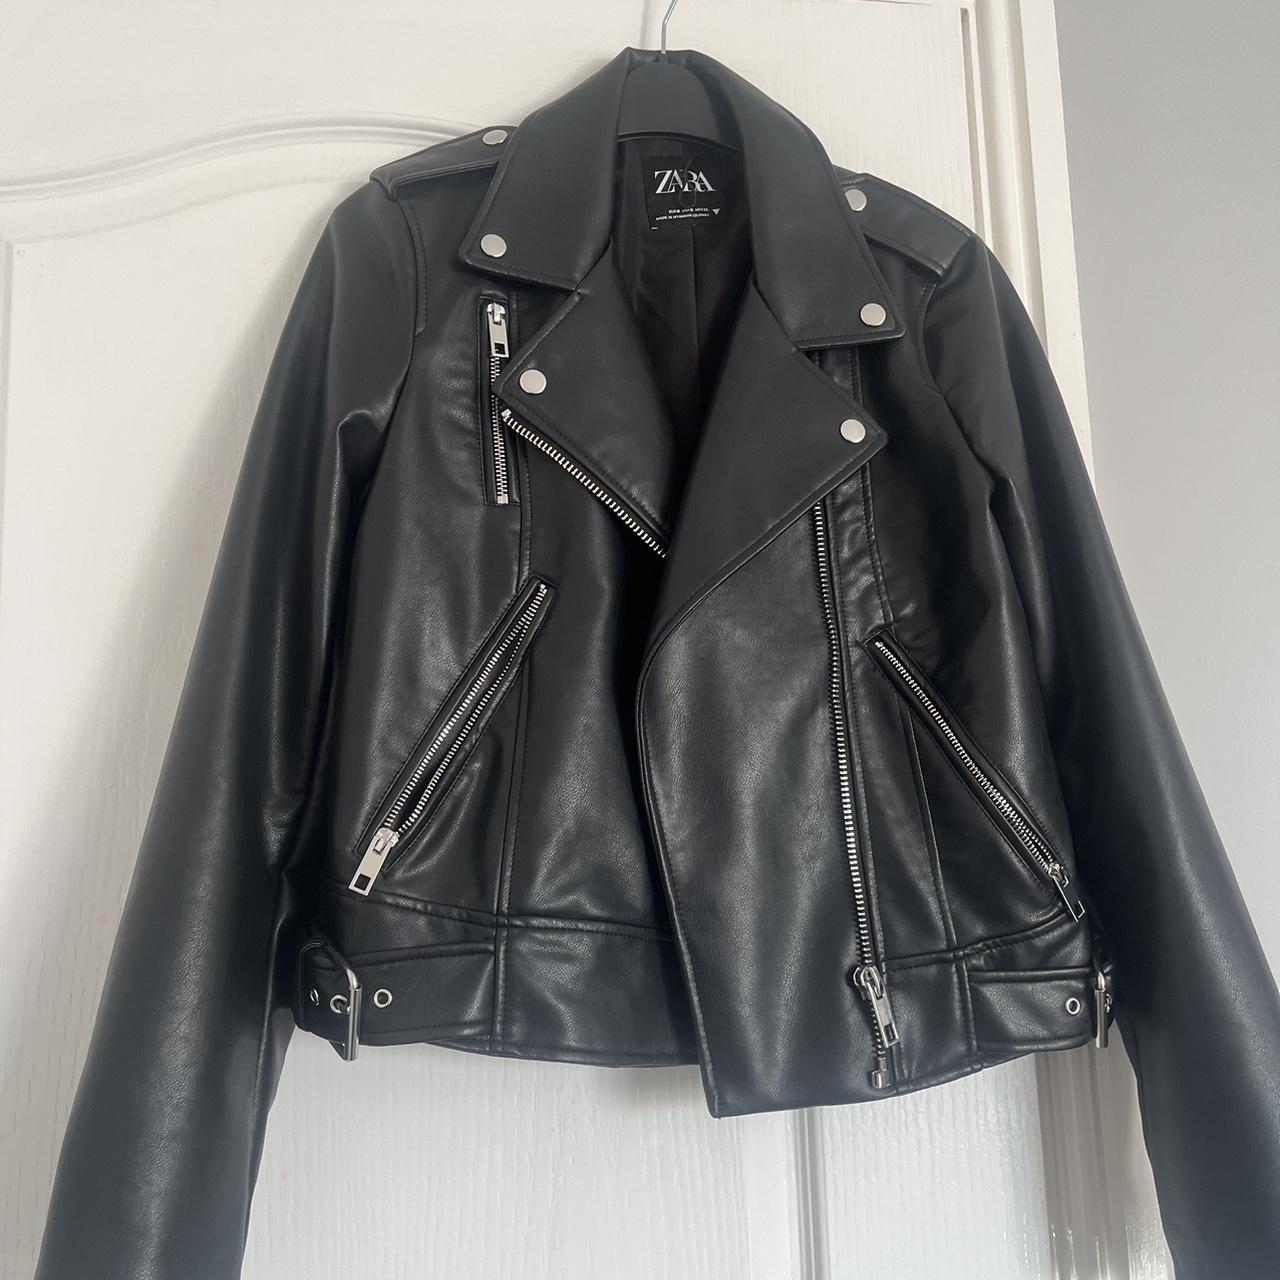 zara leather jacket never worn before - Depop